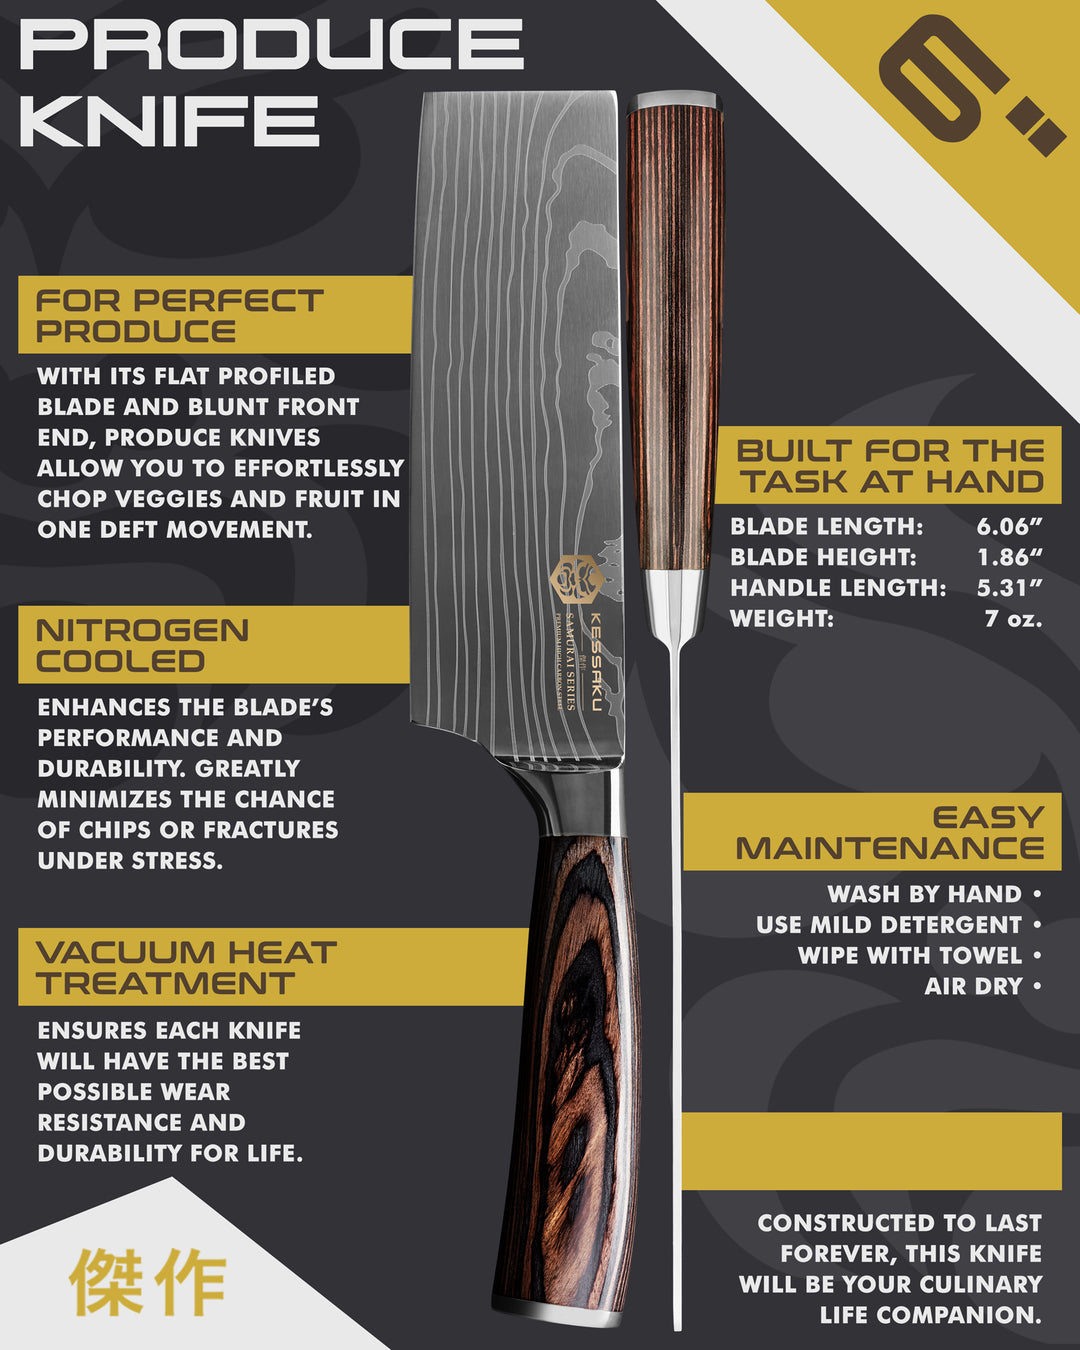 Kessaku Samurai Series Produce Knife uses, dimensions, maintenance, warranty info, and additional blade treatments